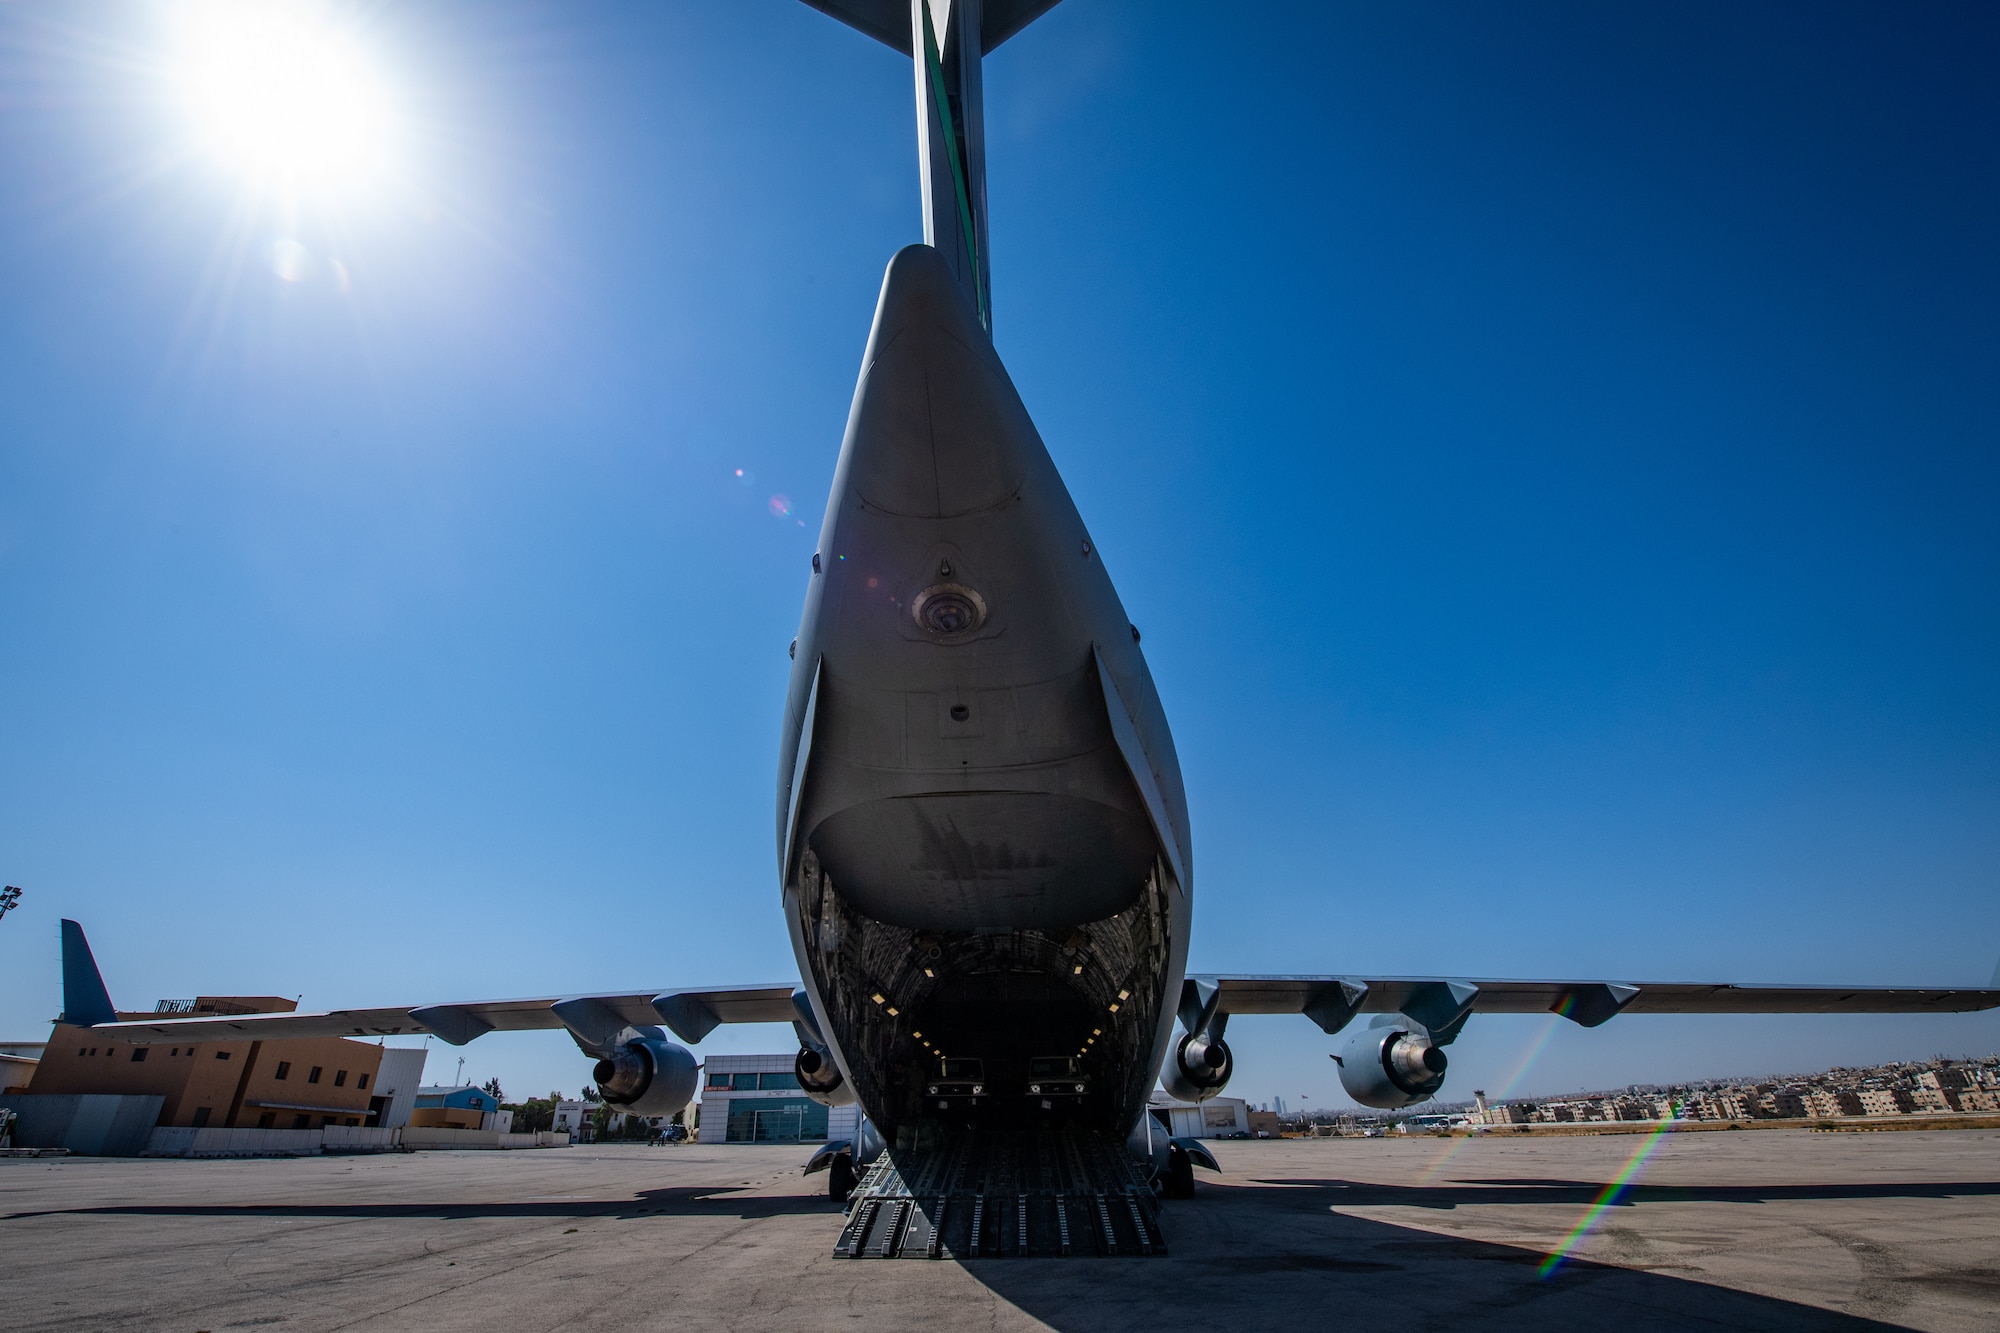 A U.S. Air Force C-17 Globemaster III awaits cargo off-load after landing in Jordan, Oct. 14, 2019.